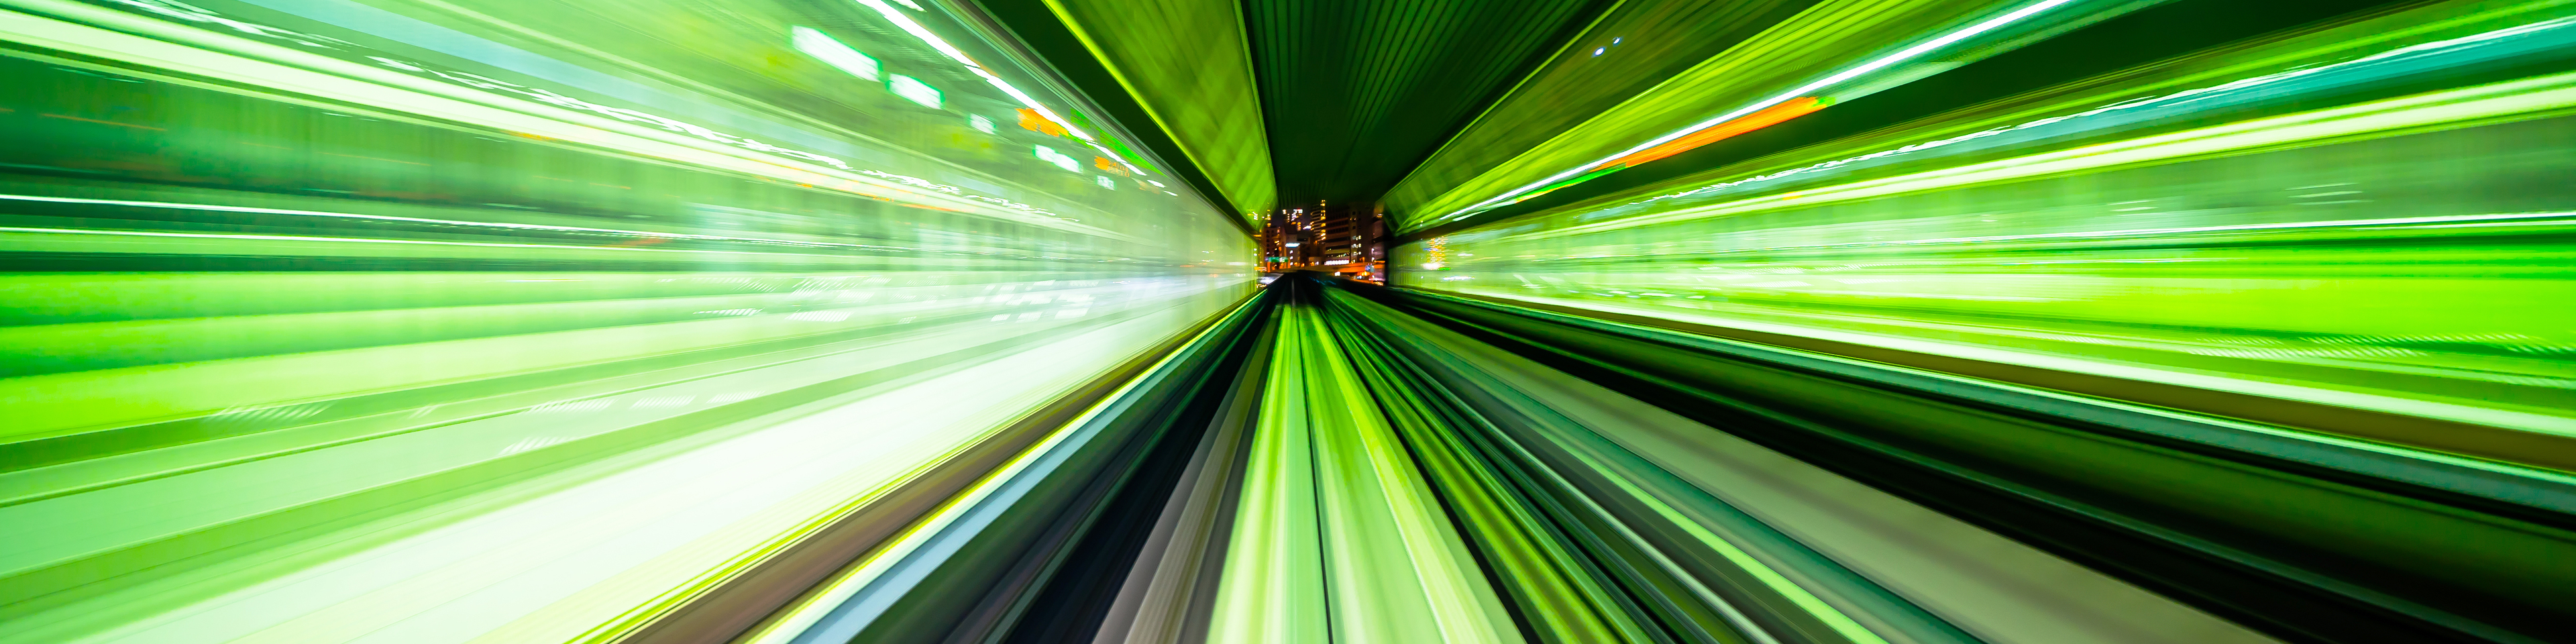 Full Frame Shot Of Illuminated Lights In Tunnel